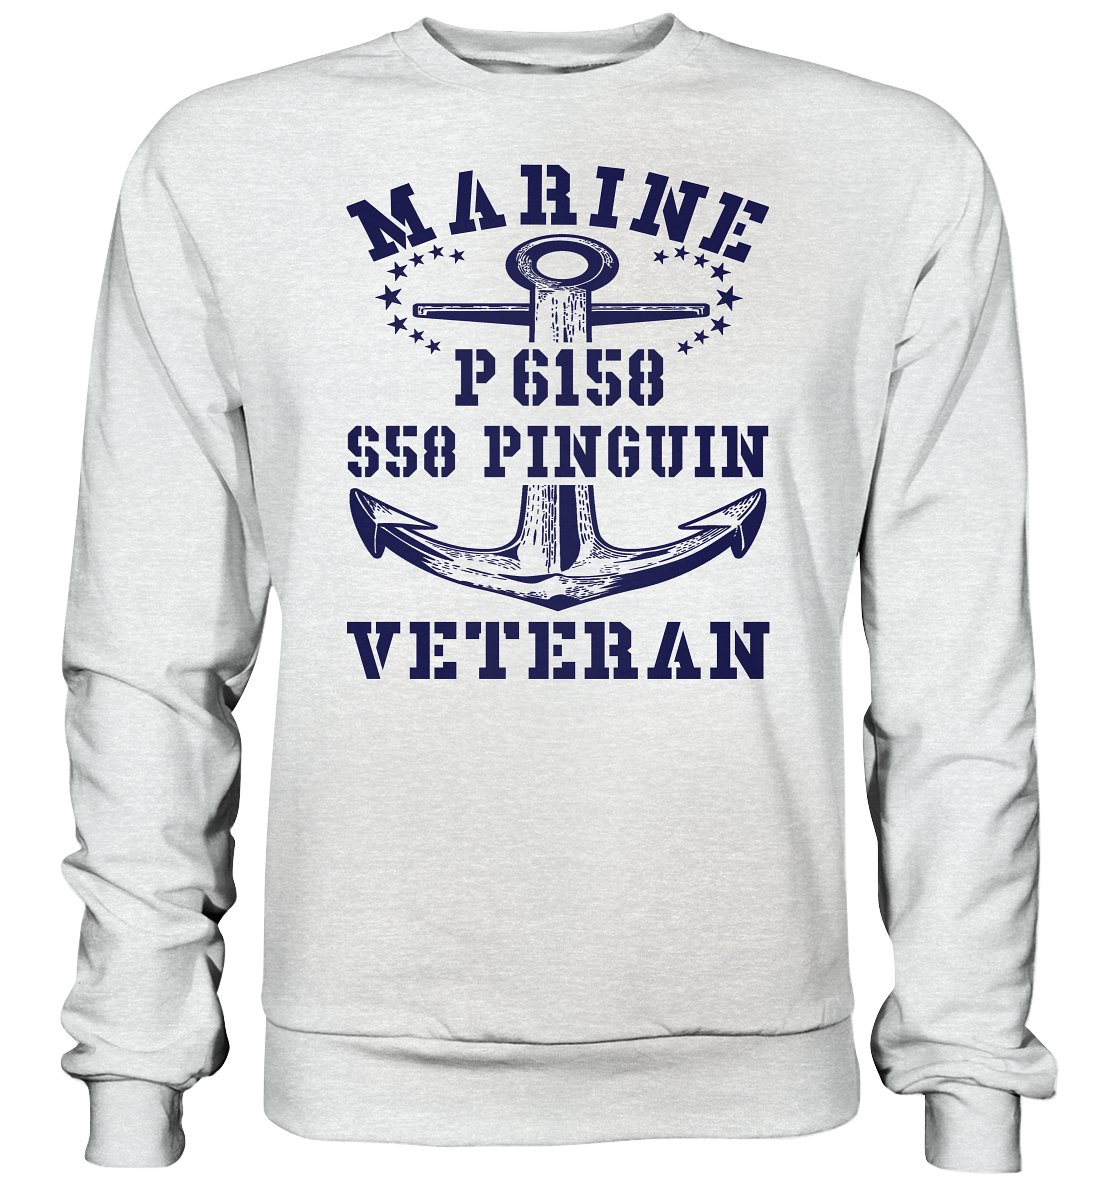 P6158 S58 PINGUIN Marine Veteran - Premium Sweatshirt